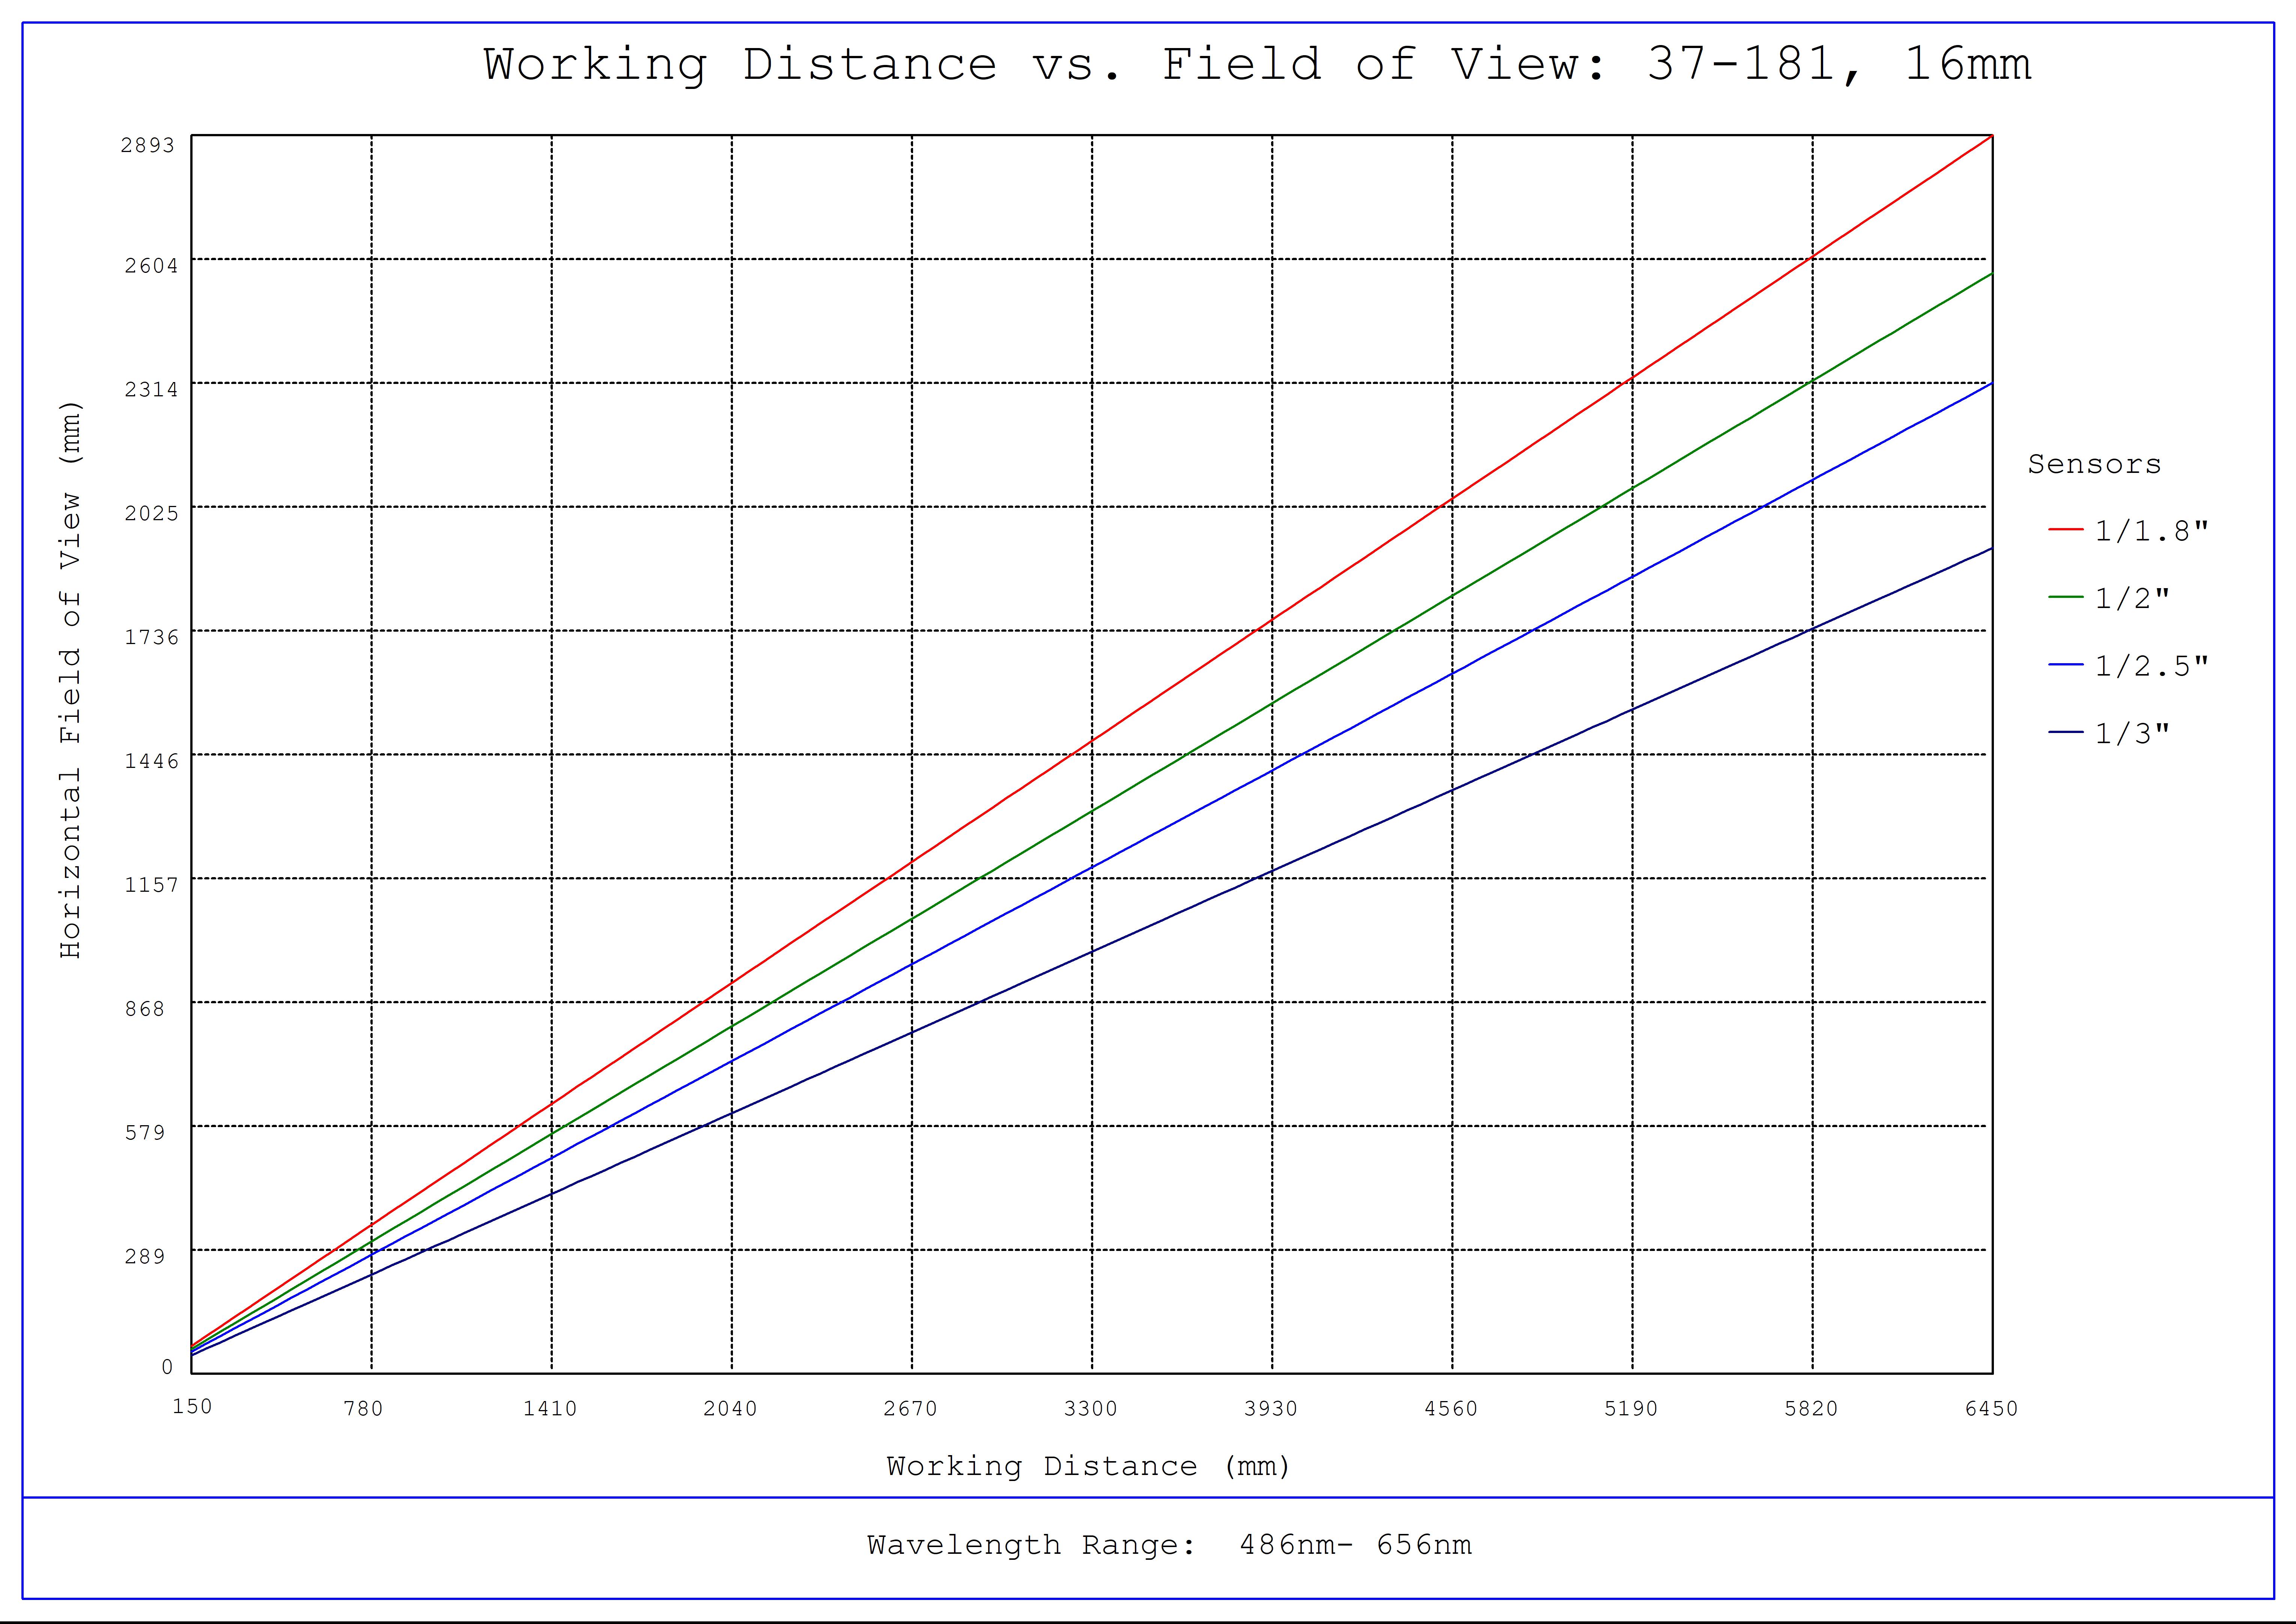 #37-181, 16mm FL f/2.5 Blue Series M12 Lens, Working Distance versus Field of View Plot